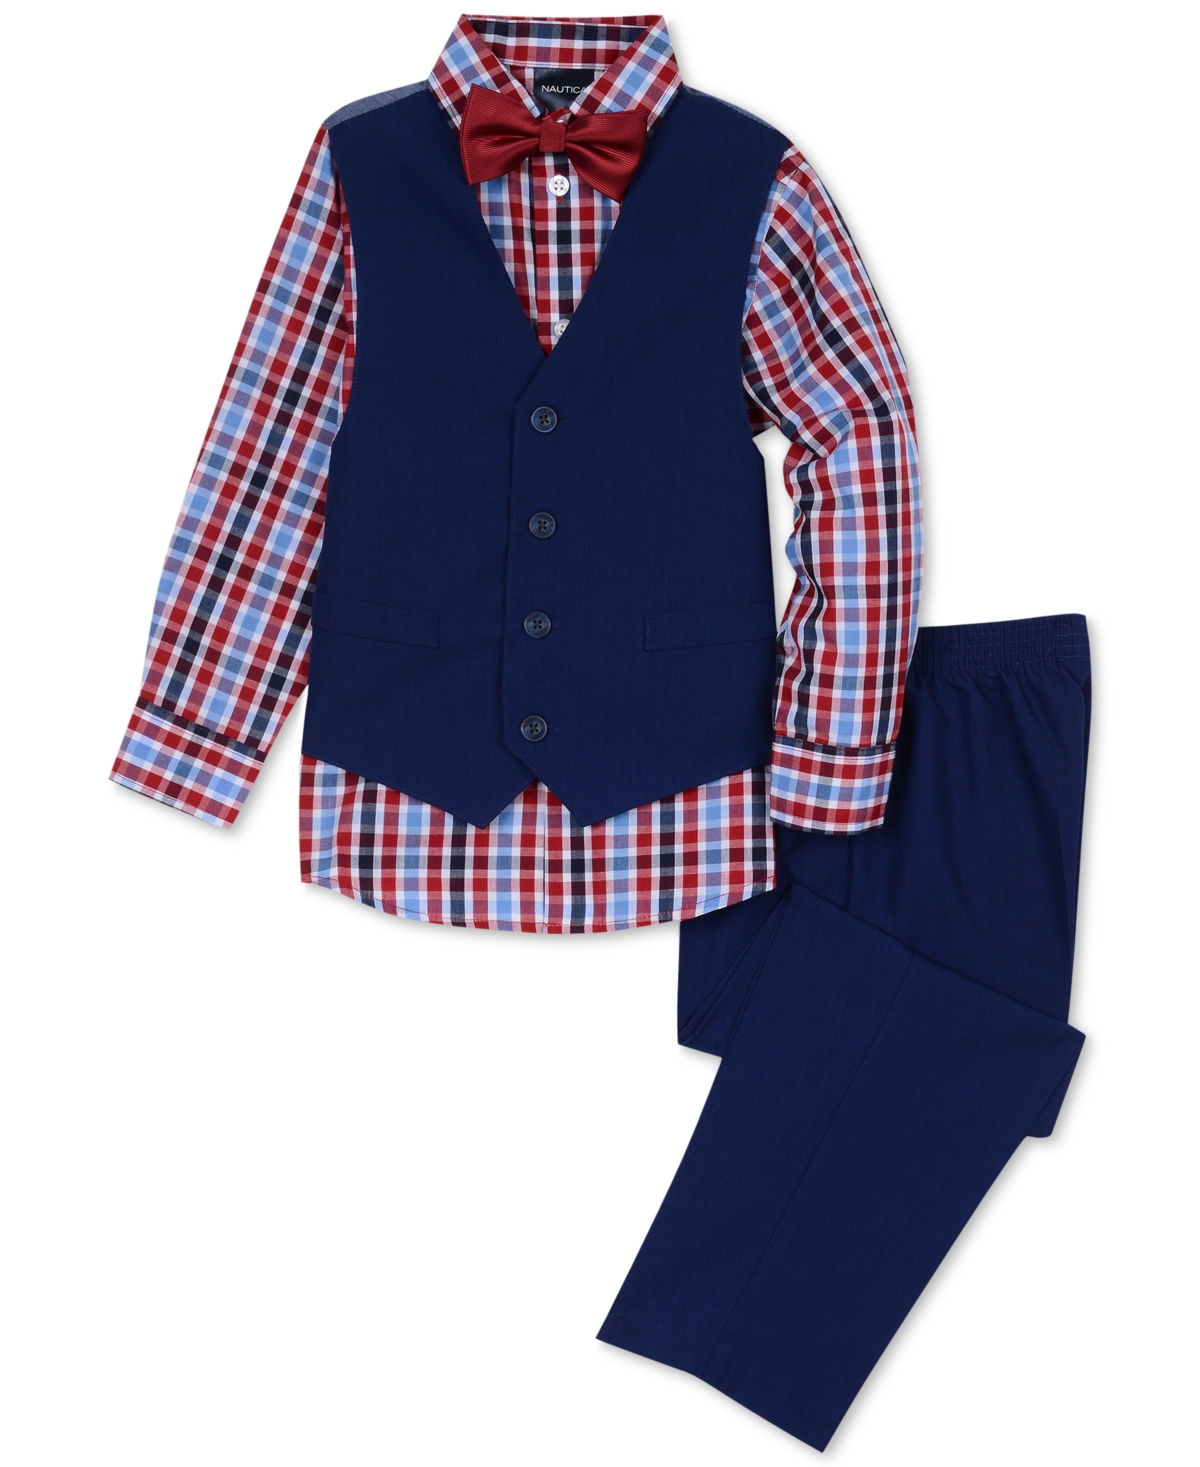 Tie Nautica Boys' 4-Piece Set with Dress Shirt Vest and Pants 